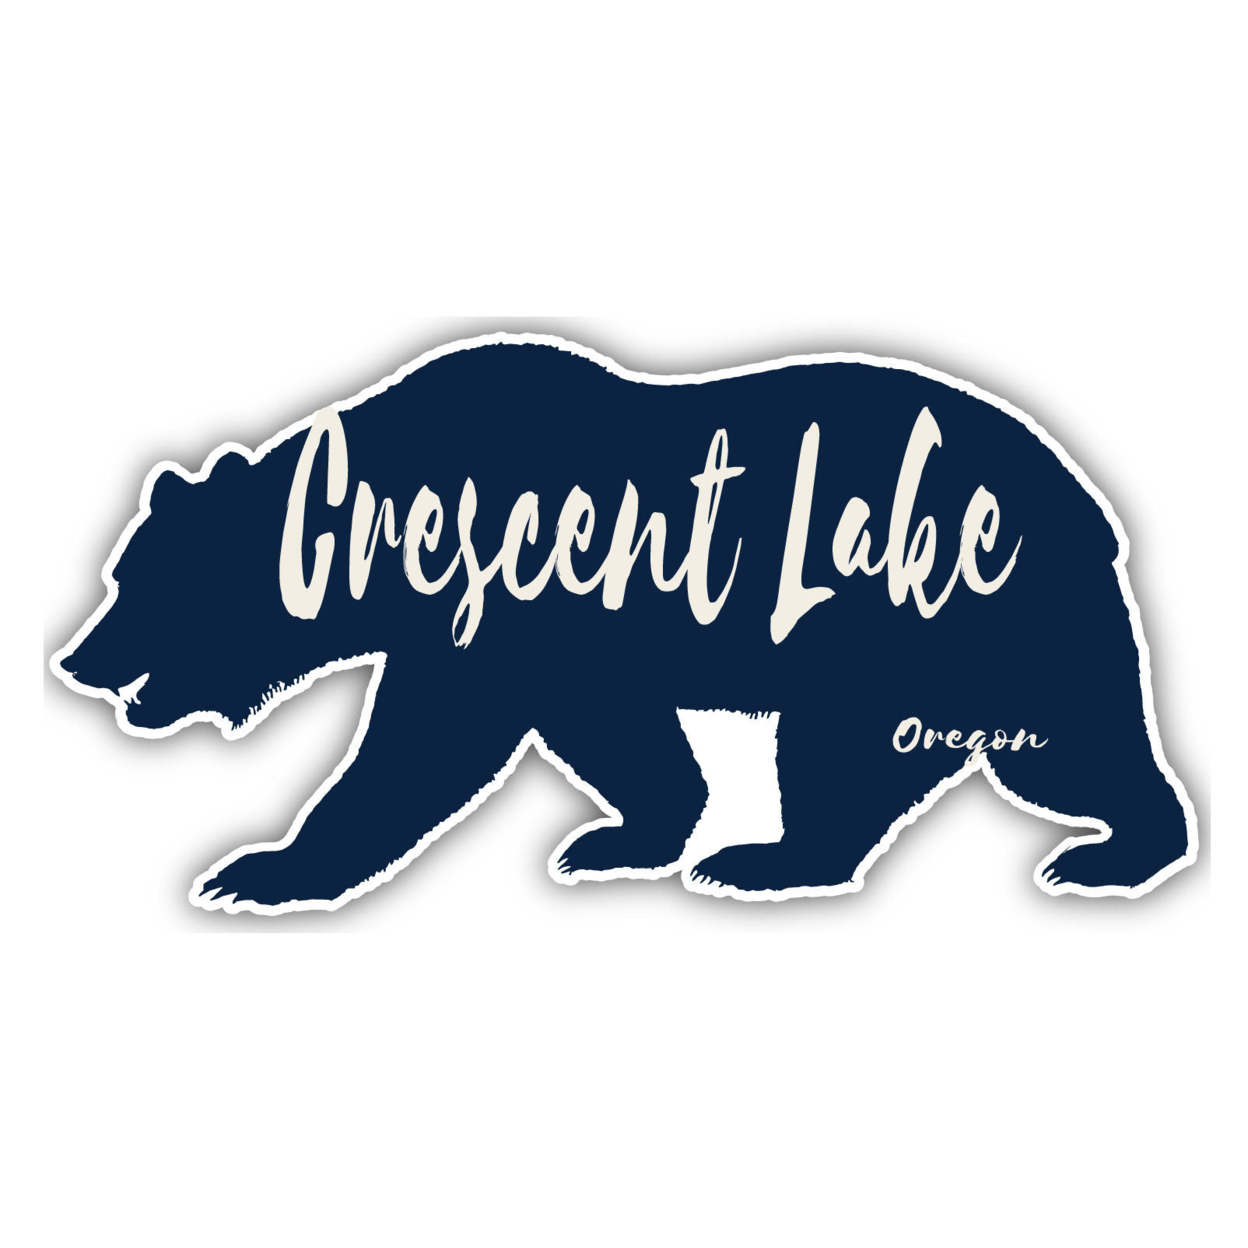 Crescent Lake Oregon Souvenir Decorative Stickers (Choose Theme And Size) - 4-Pack, 10-Inch, Tent